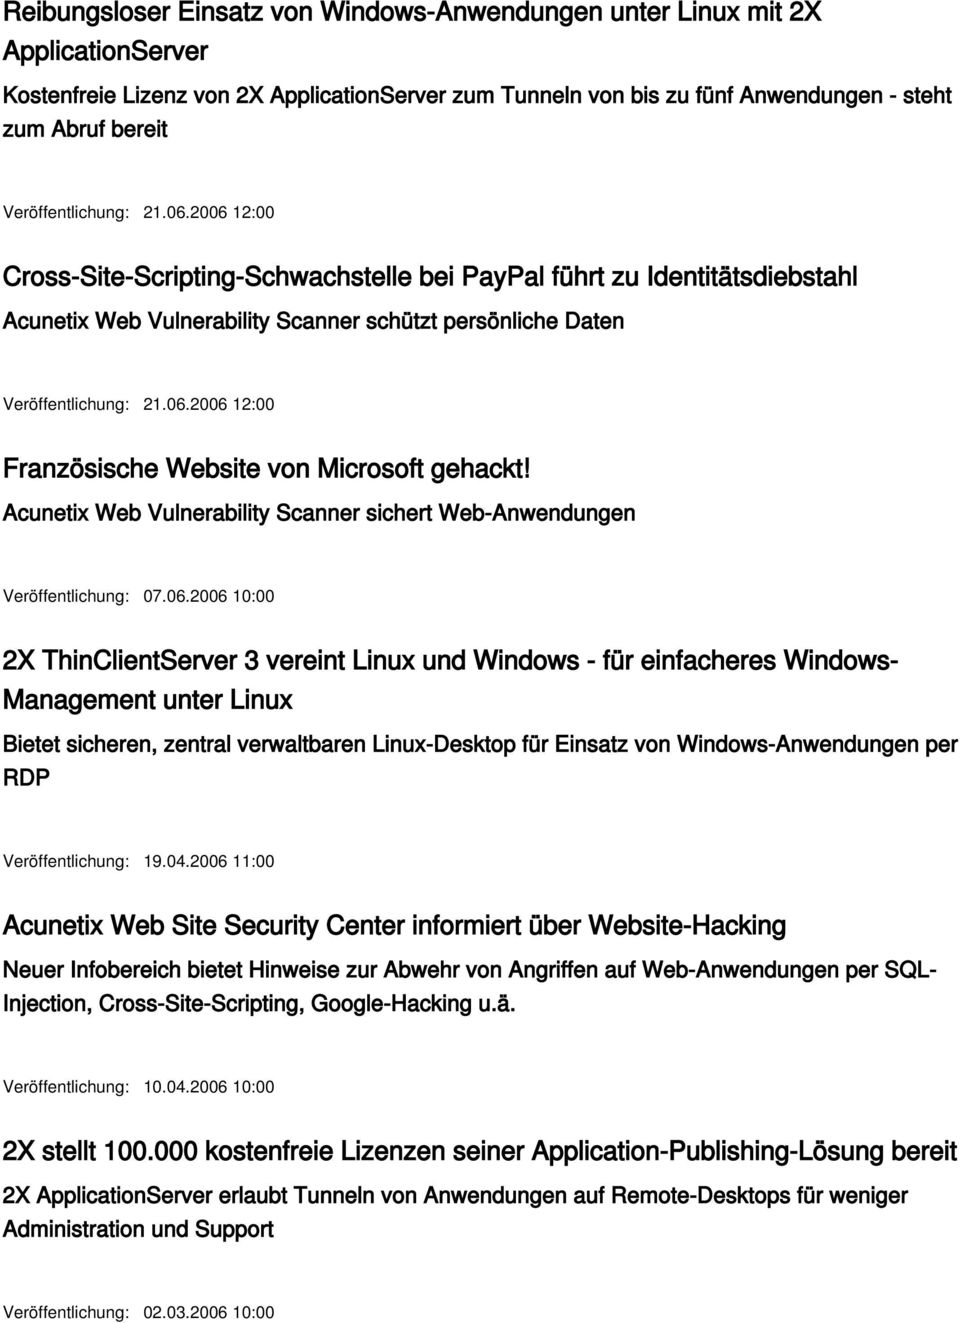 Acunetix Web Vulnerability Scanner sichert Web-Anwendungen Veröffentlichung: 07.06.